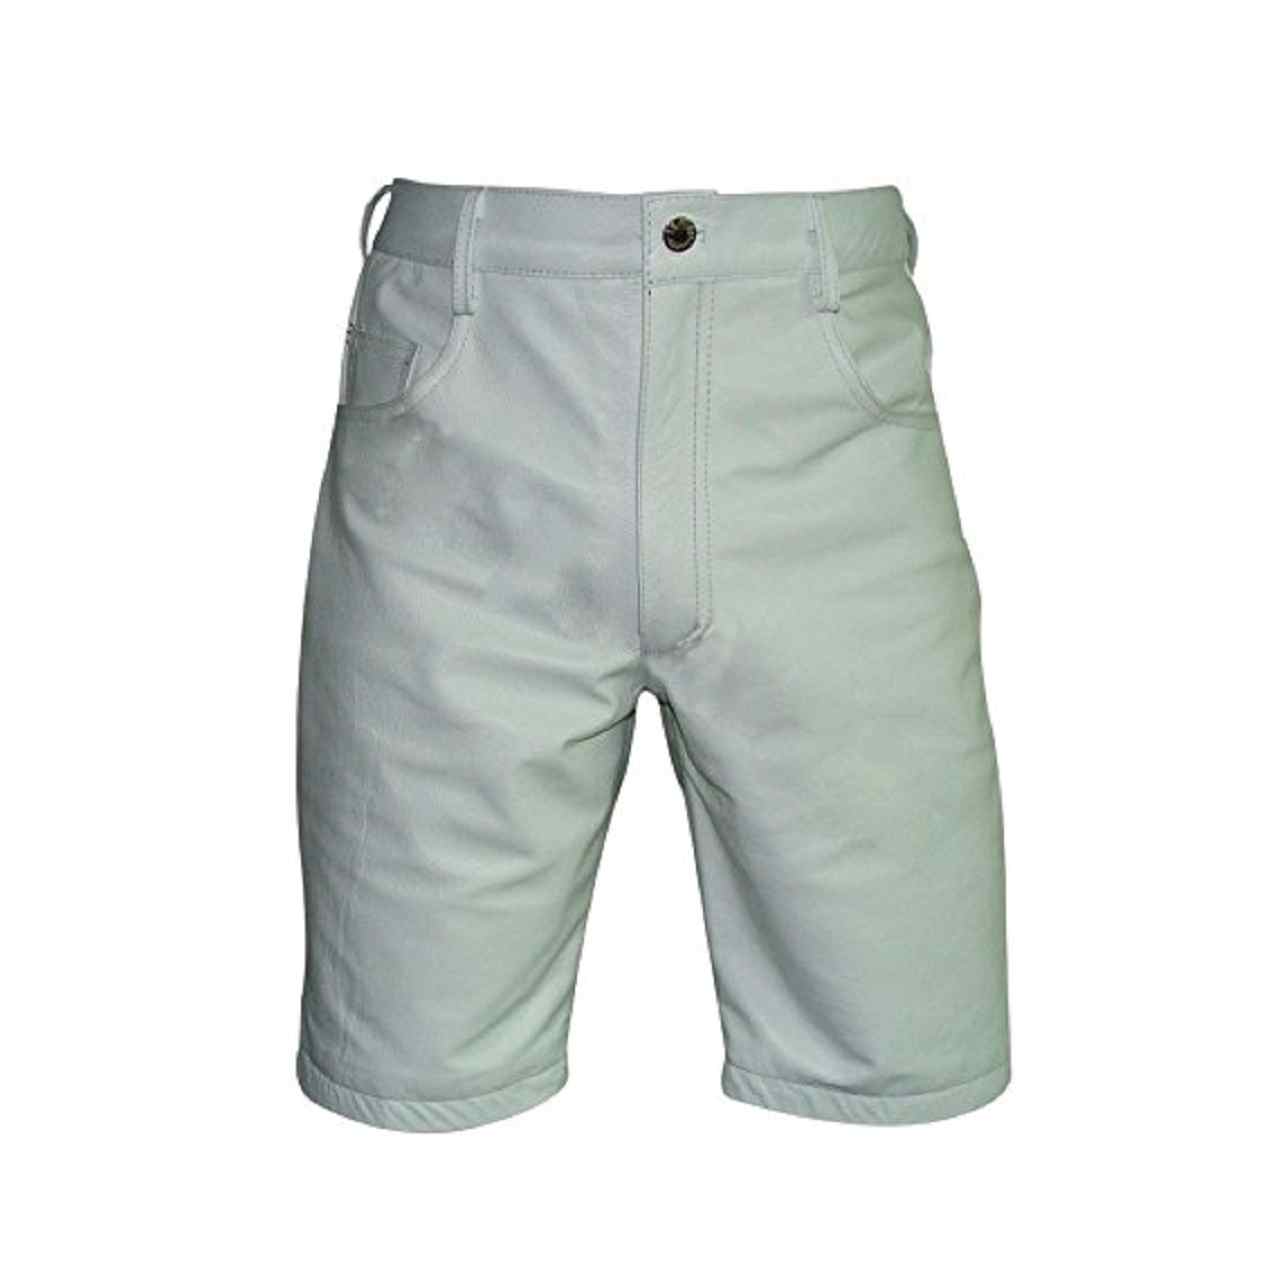 Mens Black Or White Leather Long Leg Bermuda Shorts Lederhosen - SHORTS1